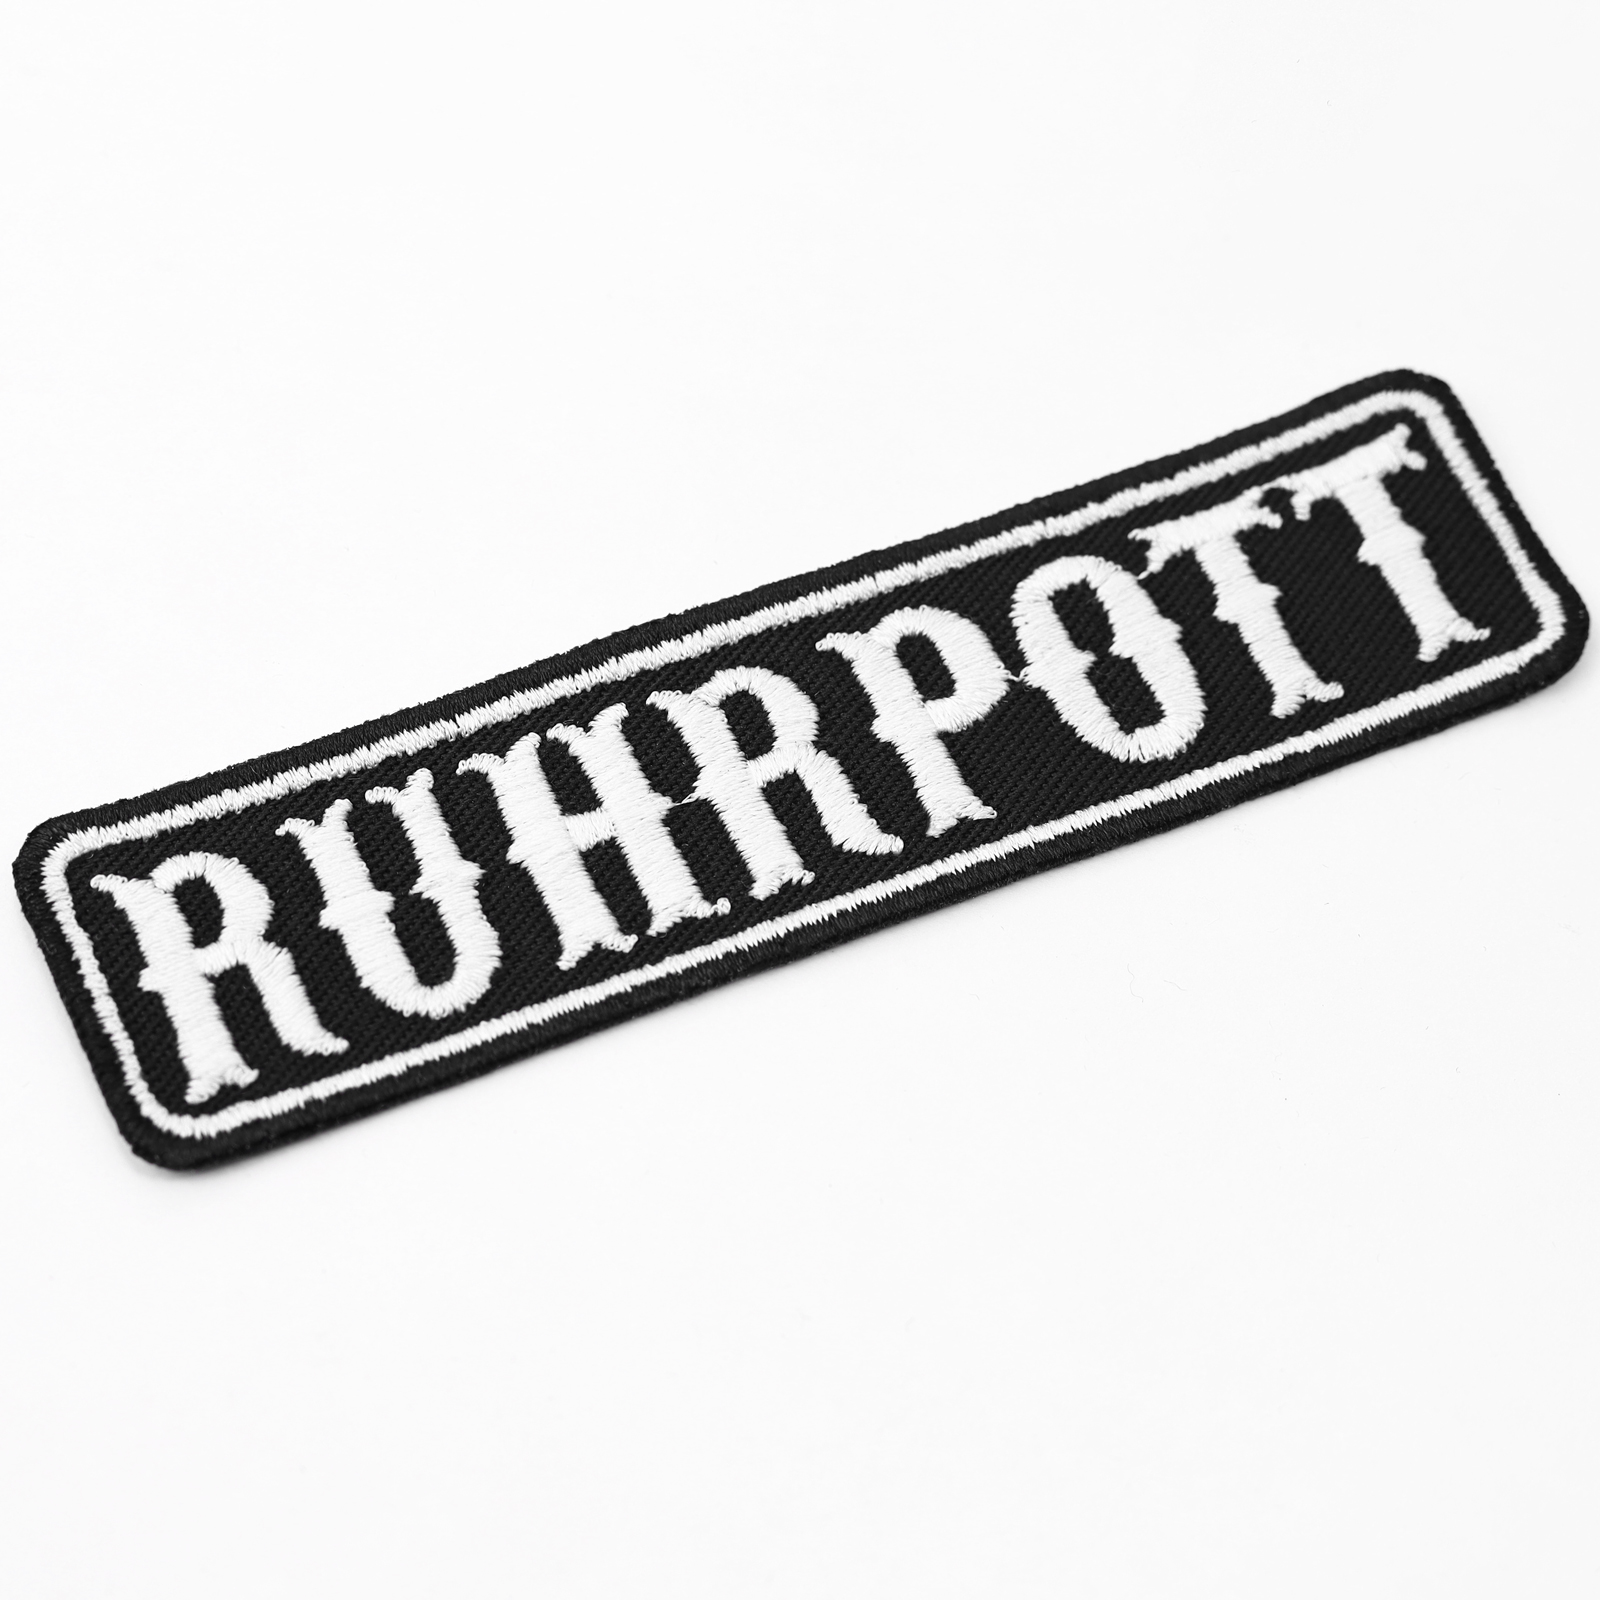 Ruhrpott - Patch